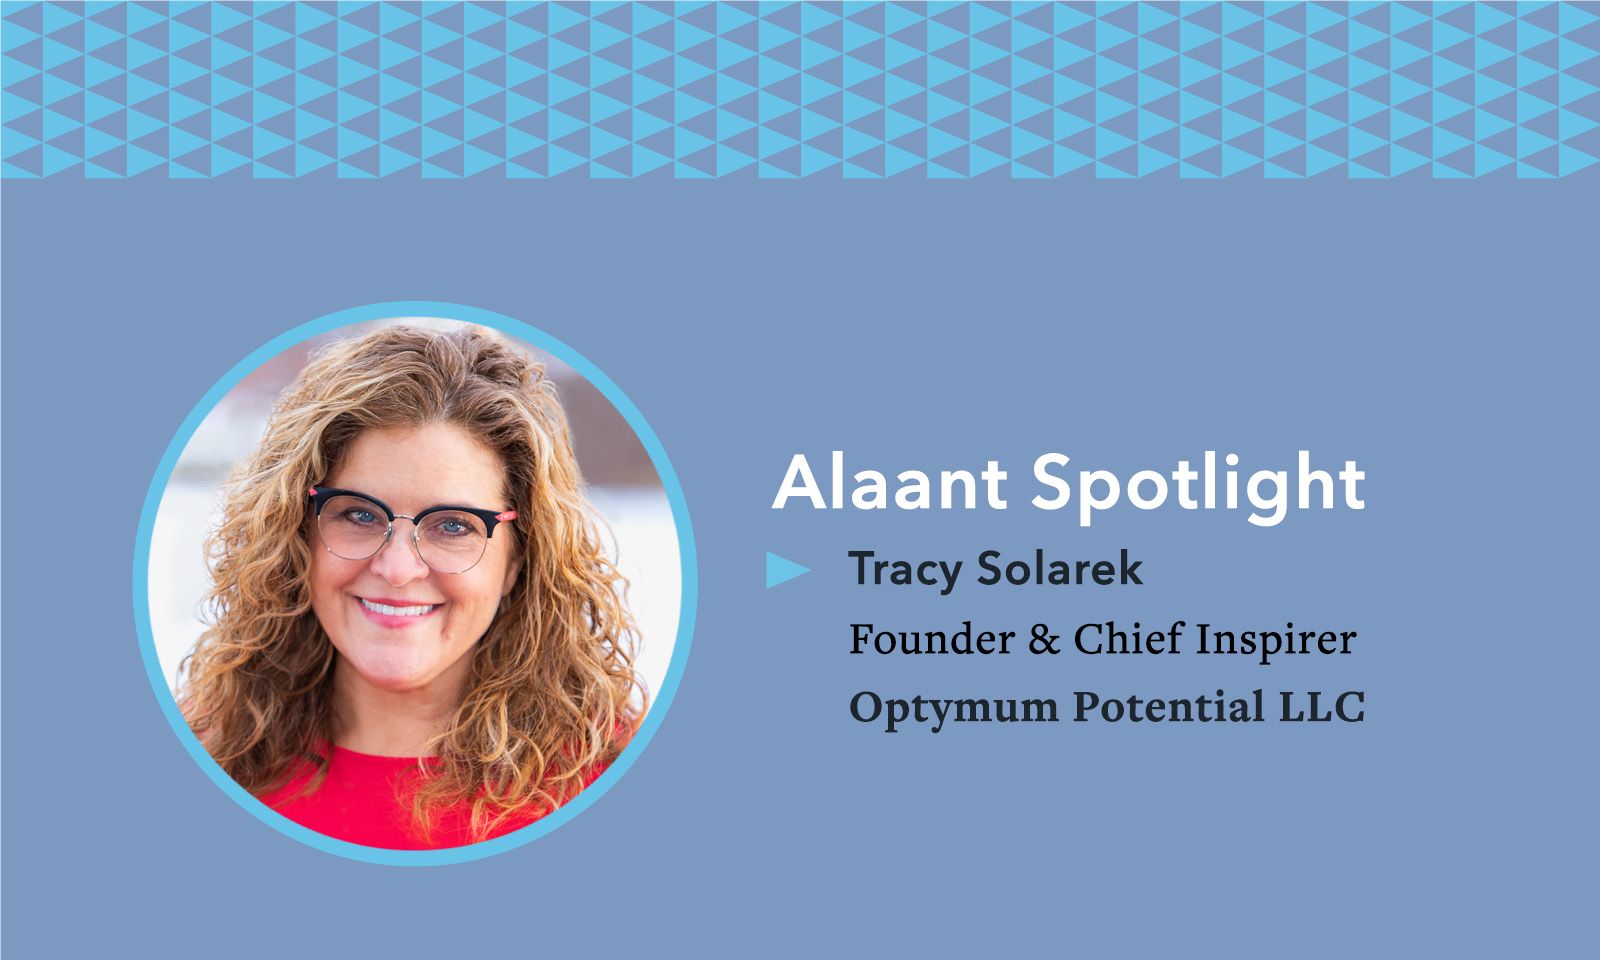 Alaant Spotlight: Tracy Solarek, Founder & Chief Inspirer of Optymum Potential LLC